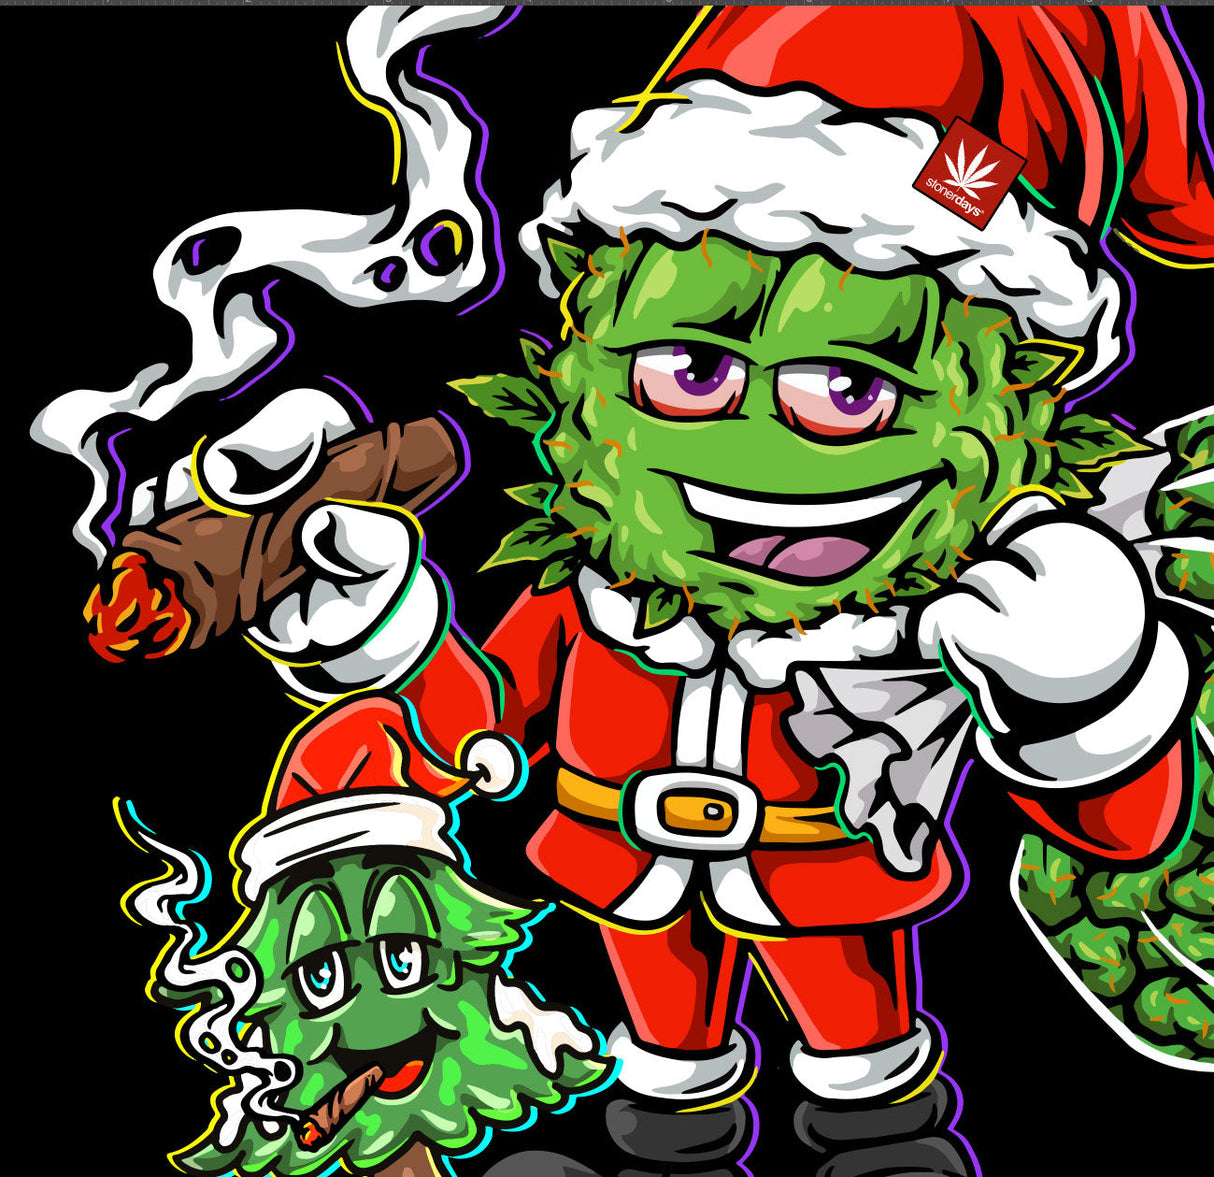 StonerDays festive long sleeve shirt with cartoon cannabis characters in Santa outfits